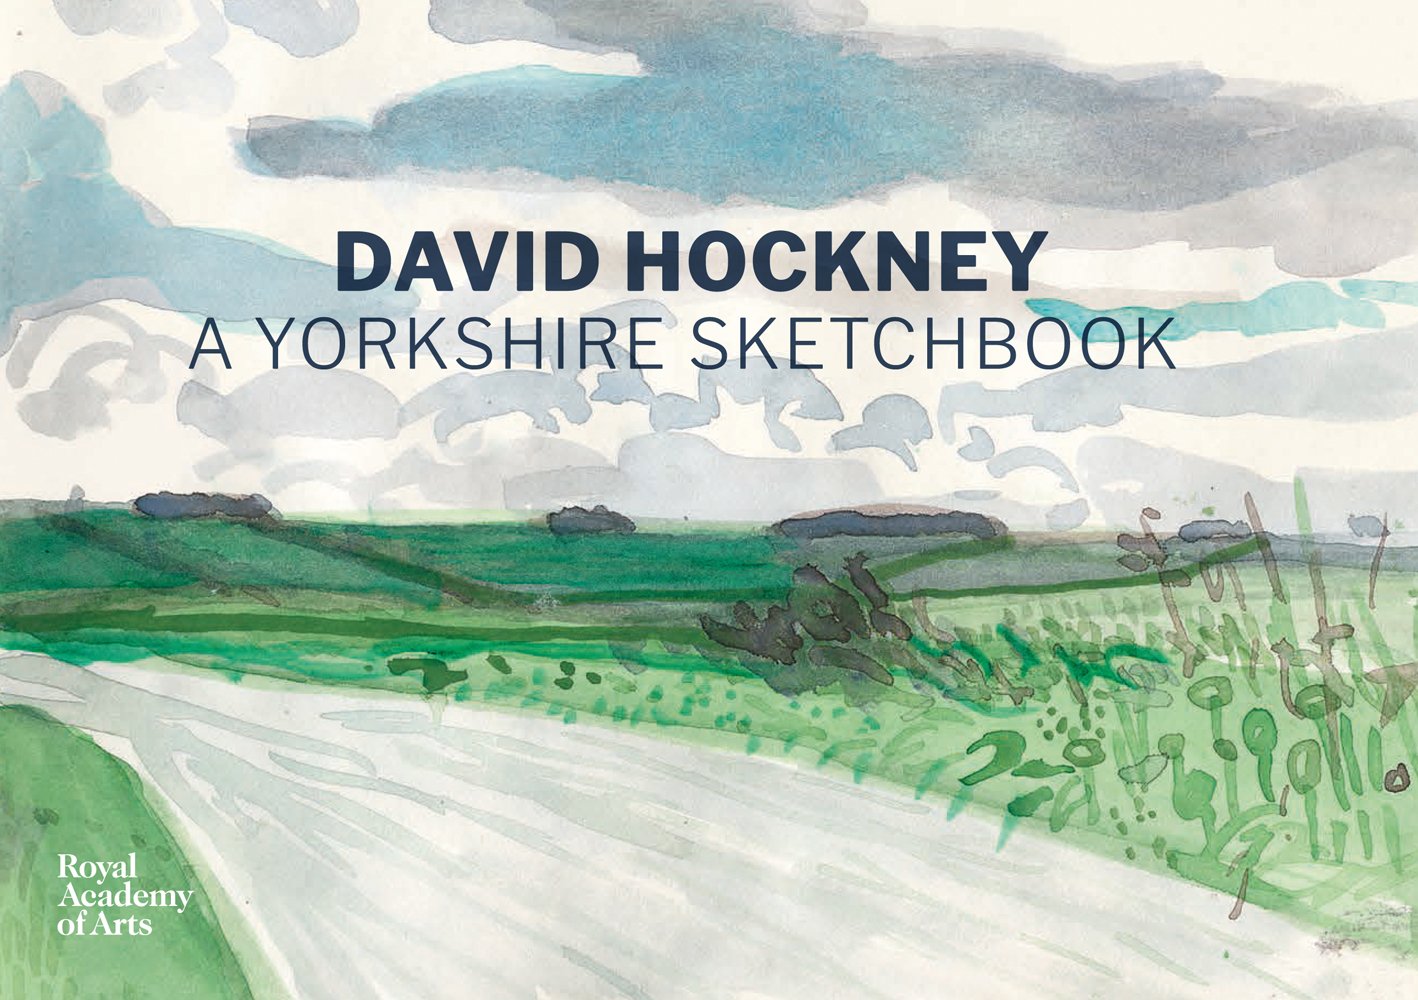 Watercolour and ink sketch of the East Yorkshire landscape, by David Hockney, 'DAVID HOCKNEY, A YORKSHIRE SKETCHBOOK', in black font above.